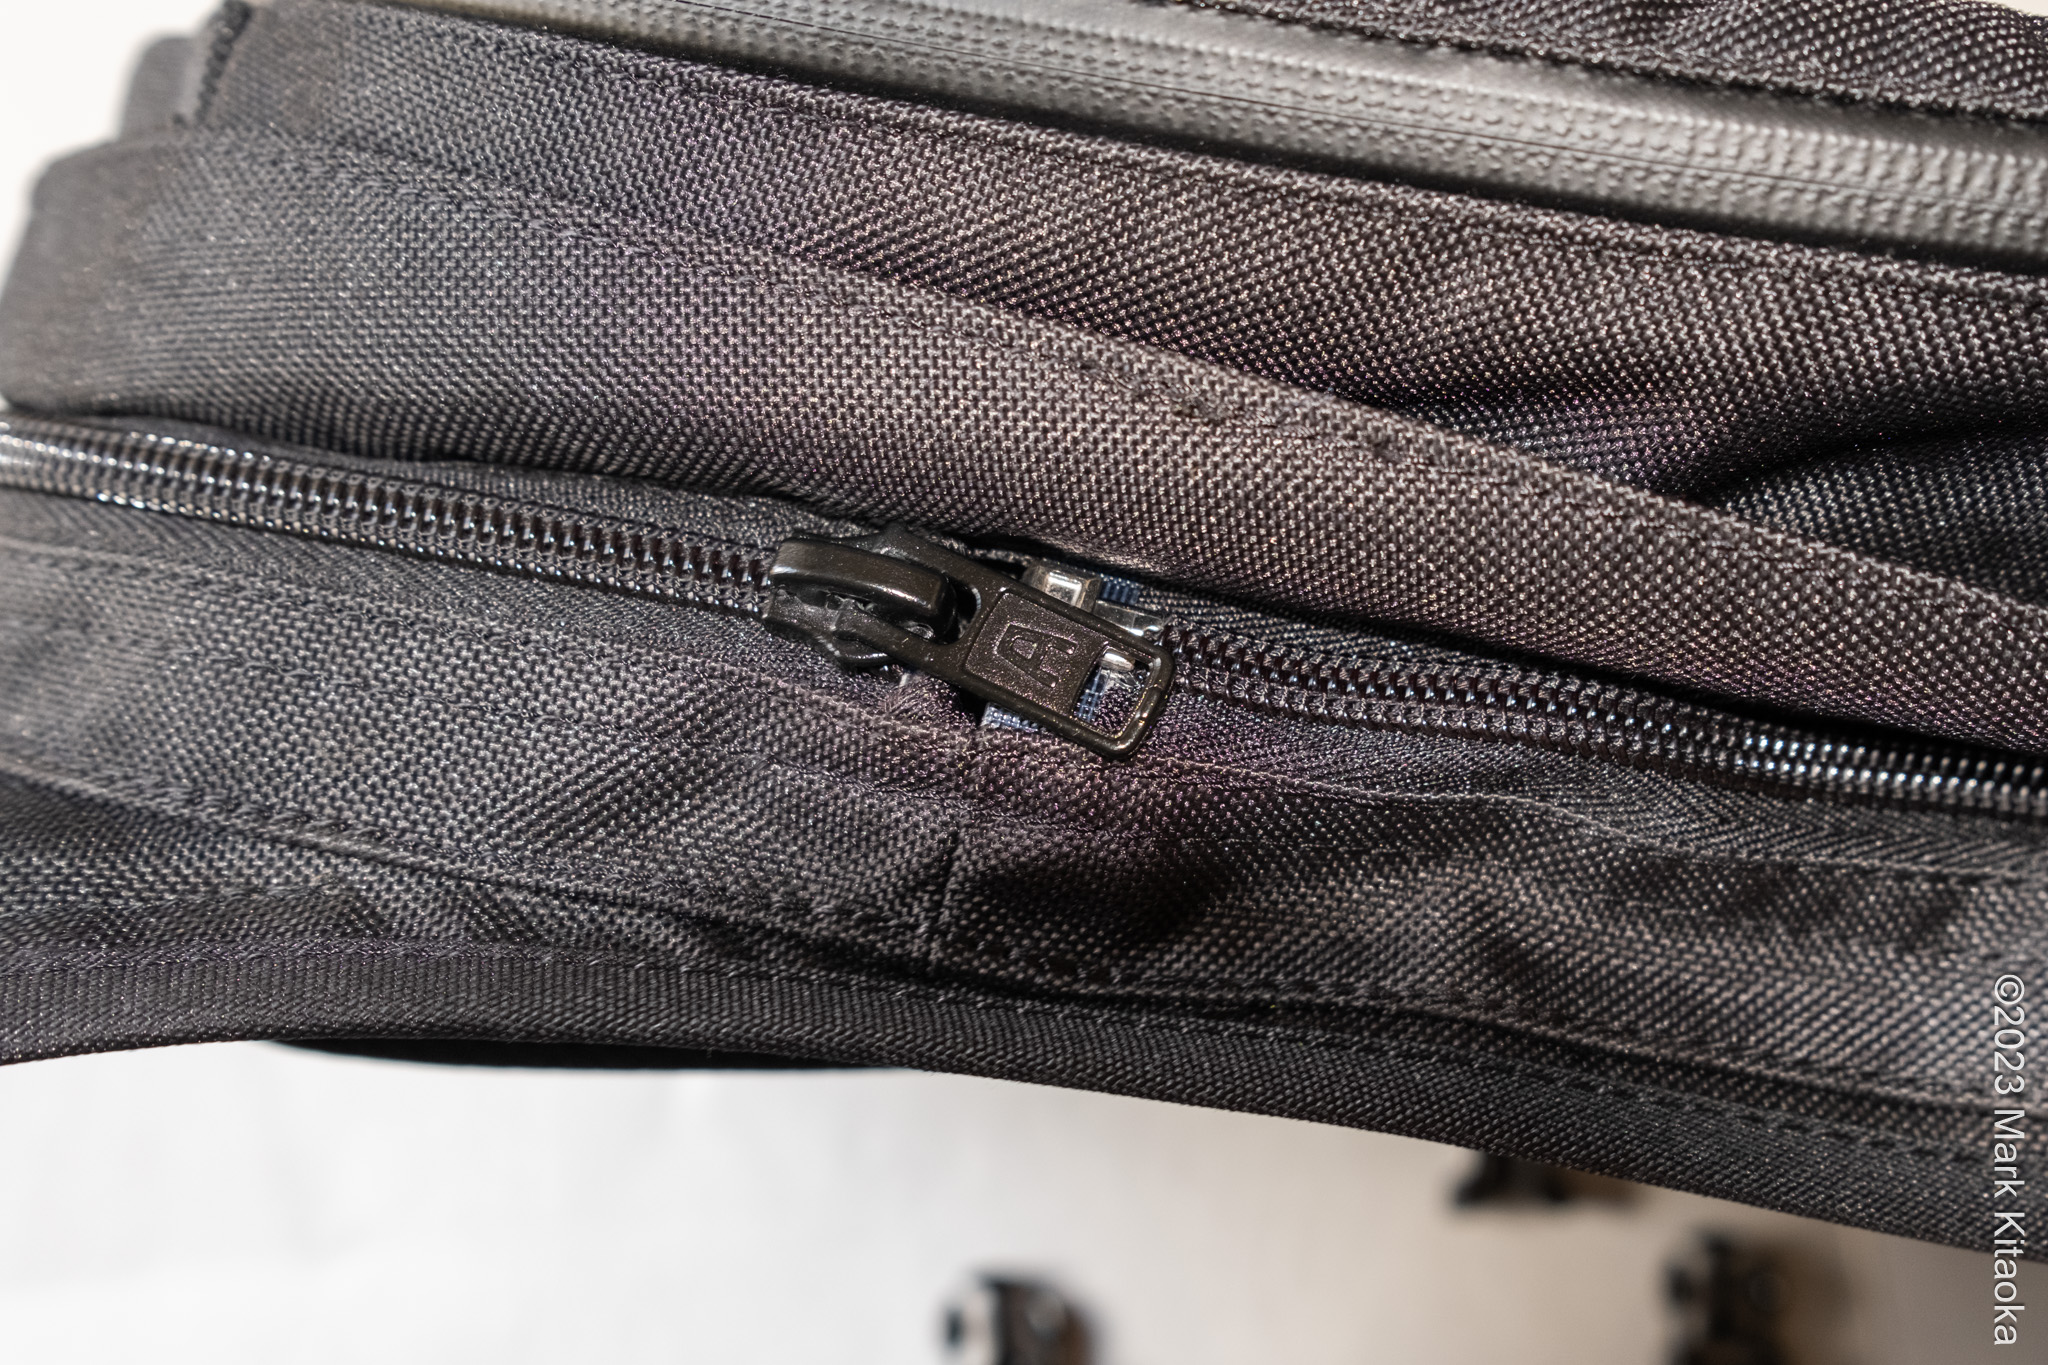 Closeup of backpack zipper